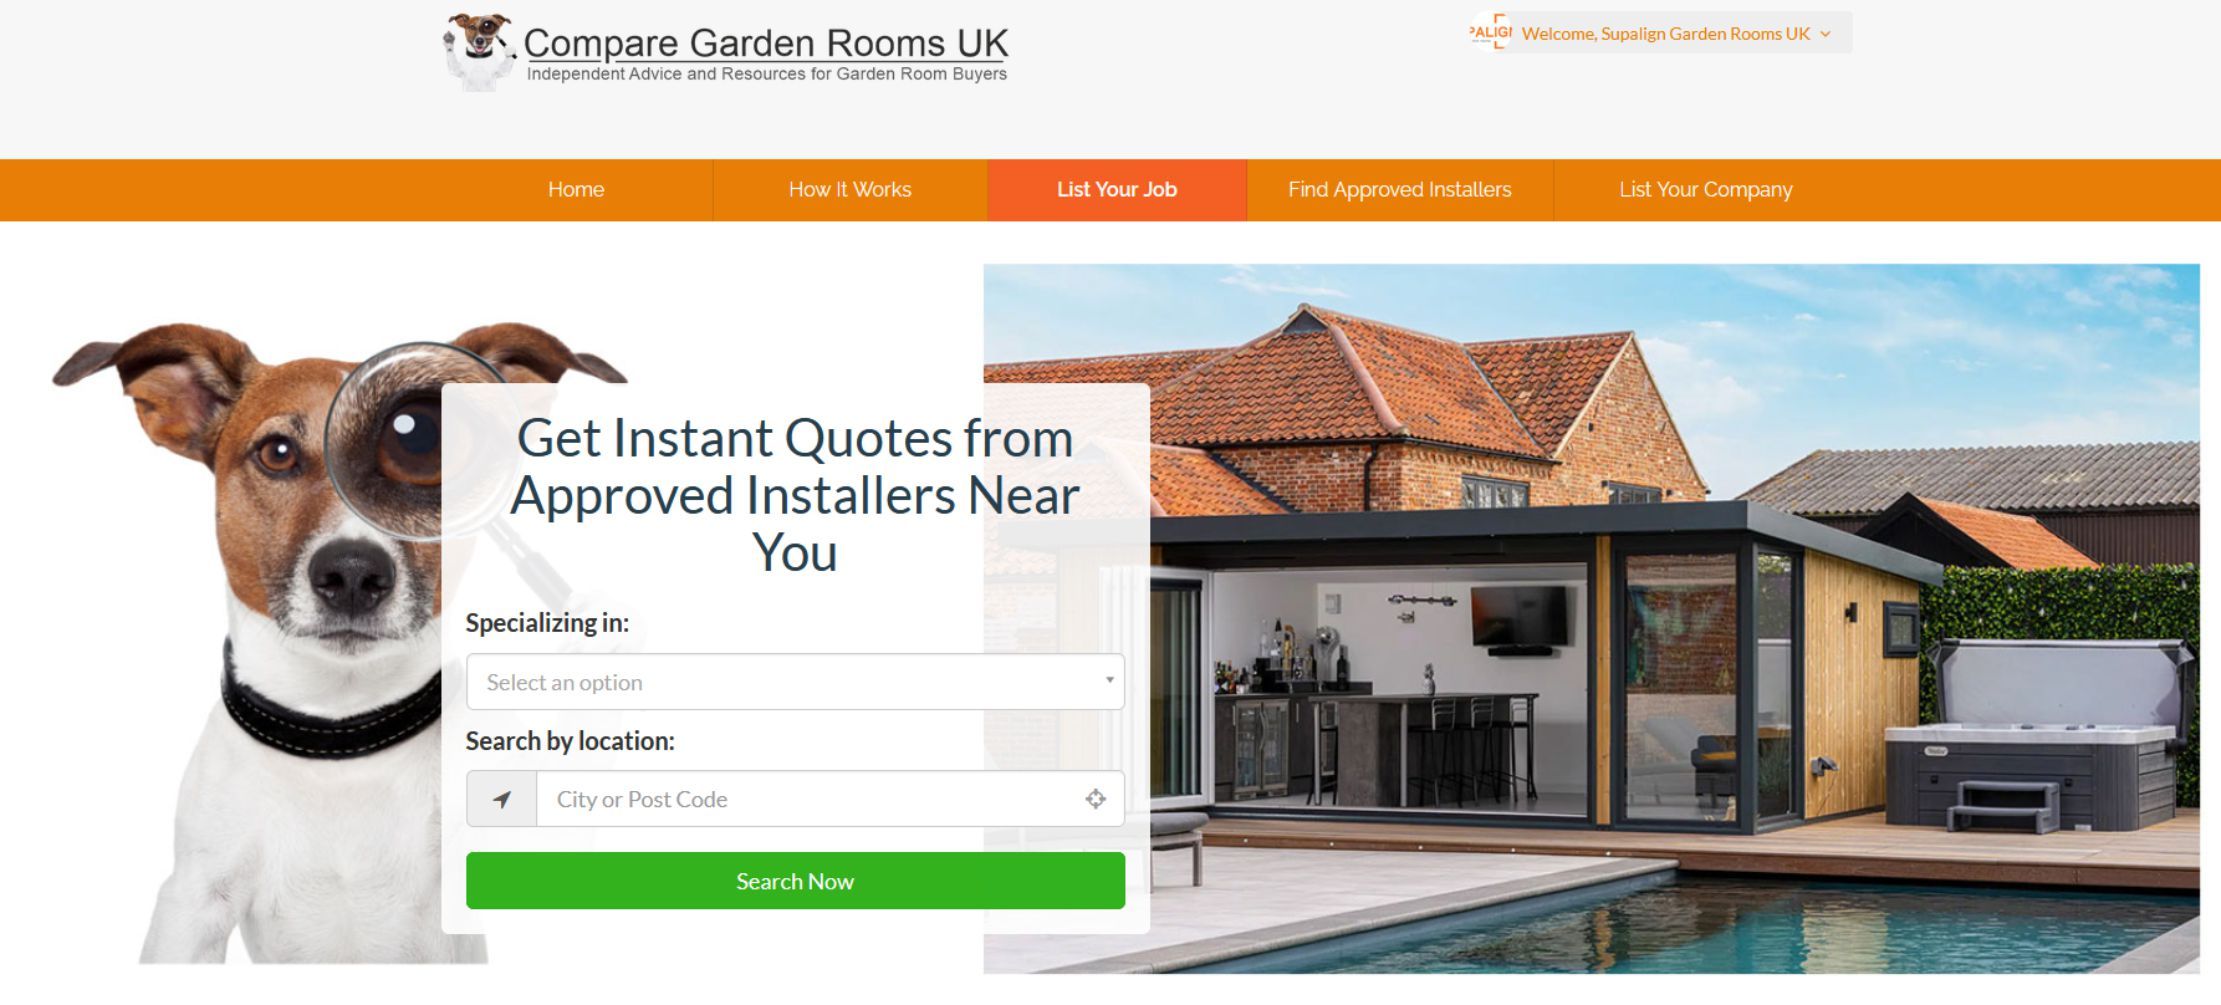 Compare Garden Rooms UK